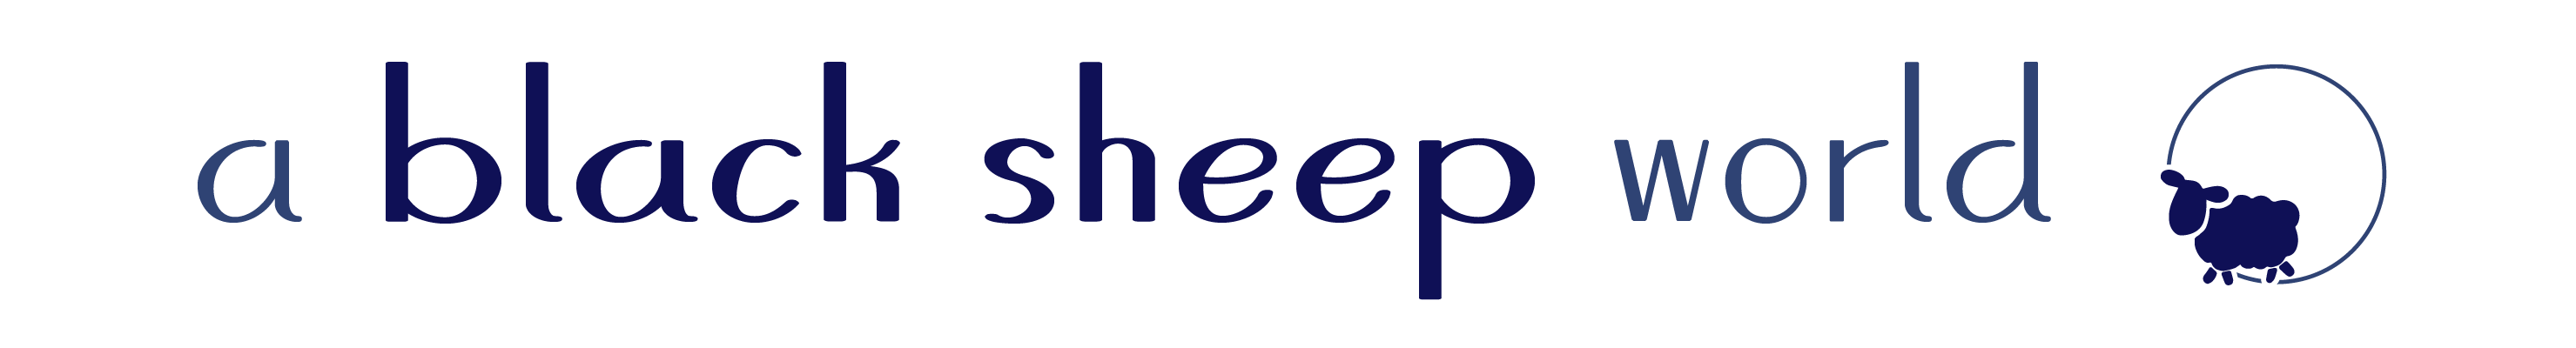 a black sheep world logo